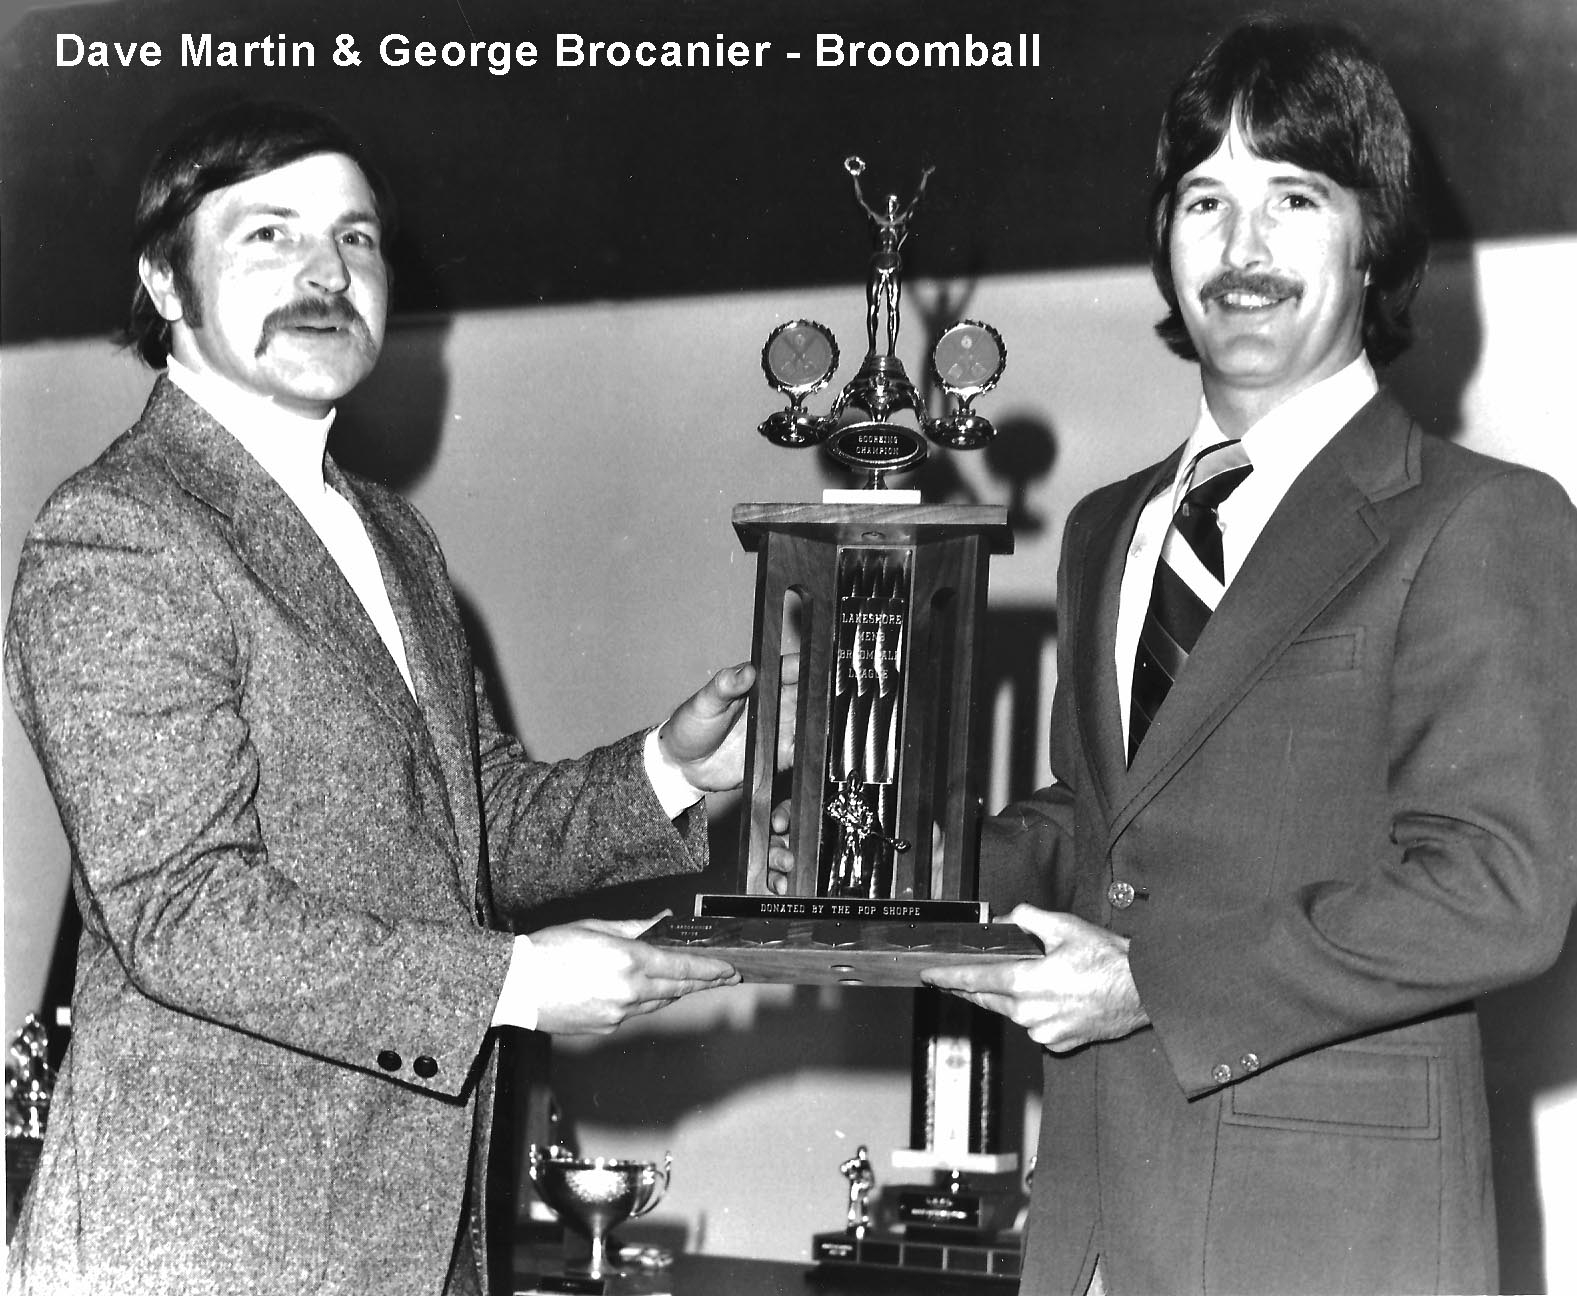 Dave Martin & George Brocanier - Broomball Awards